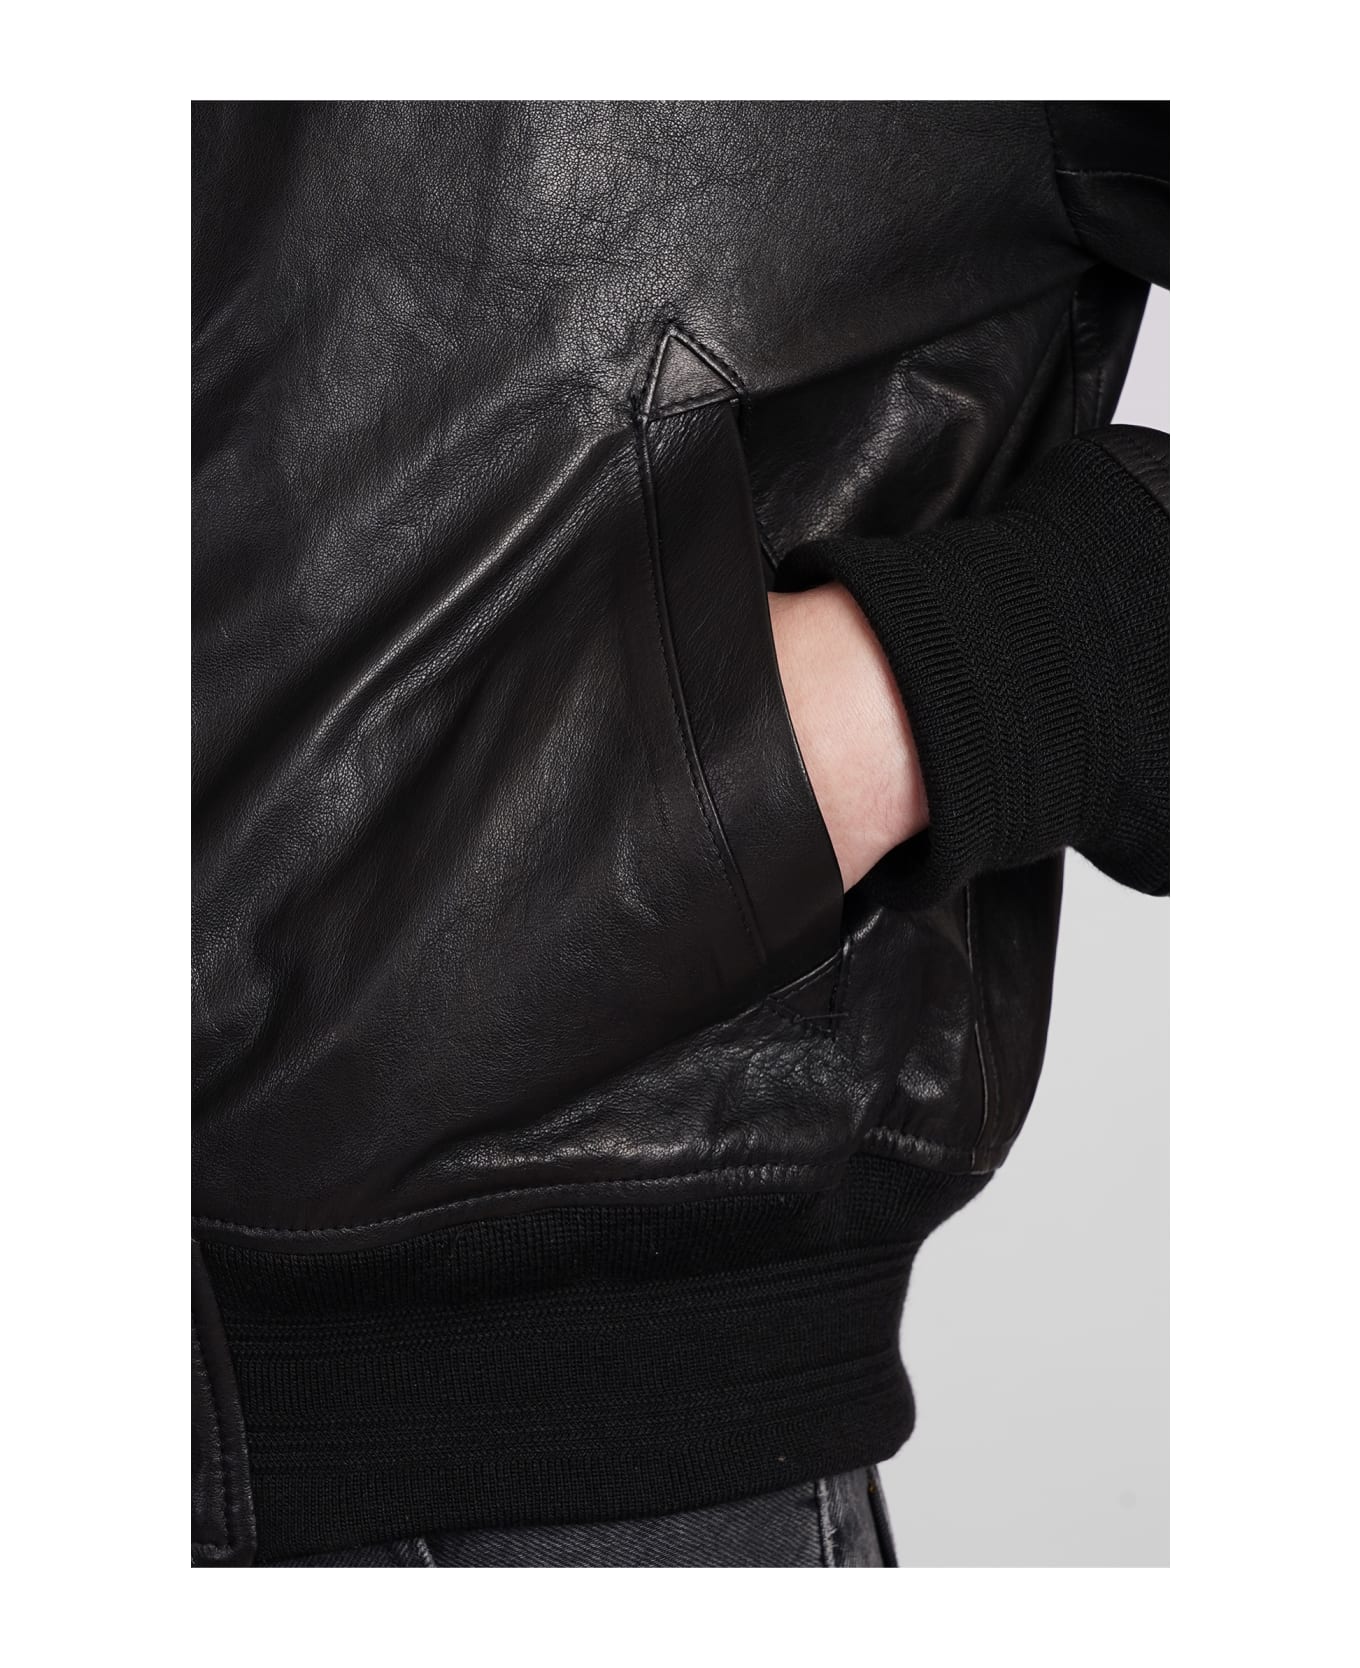 DFour Leather Jacket In Black Leather - black